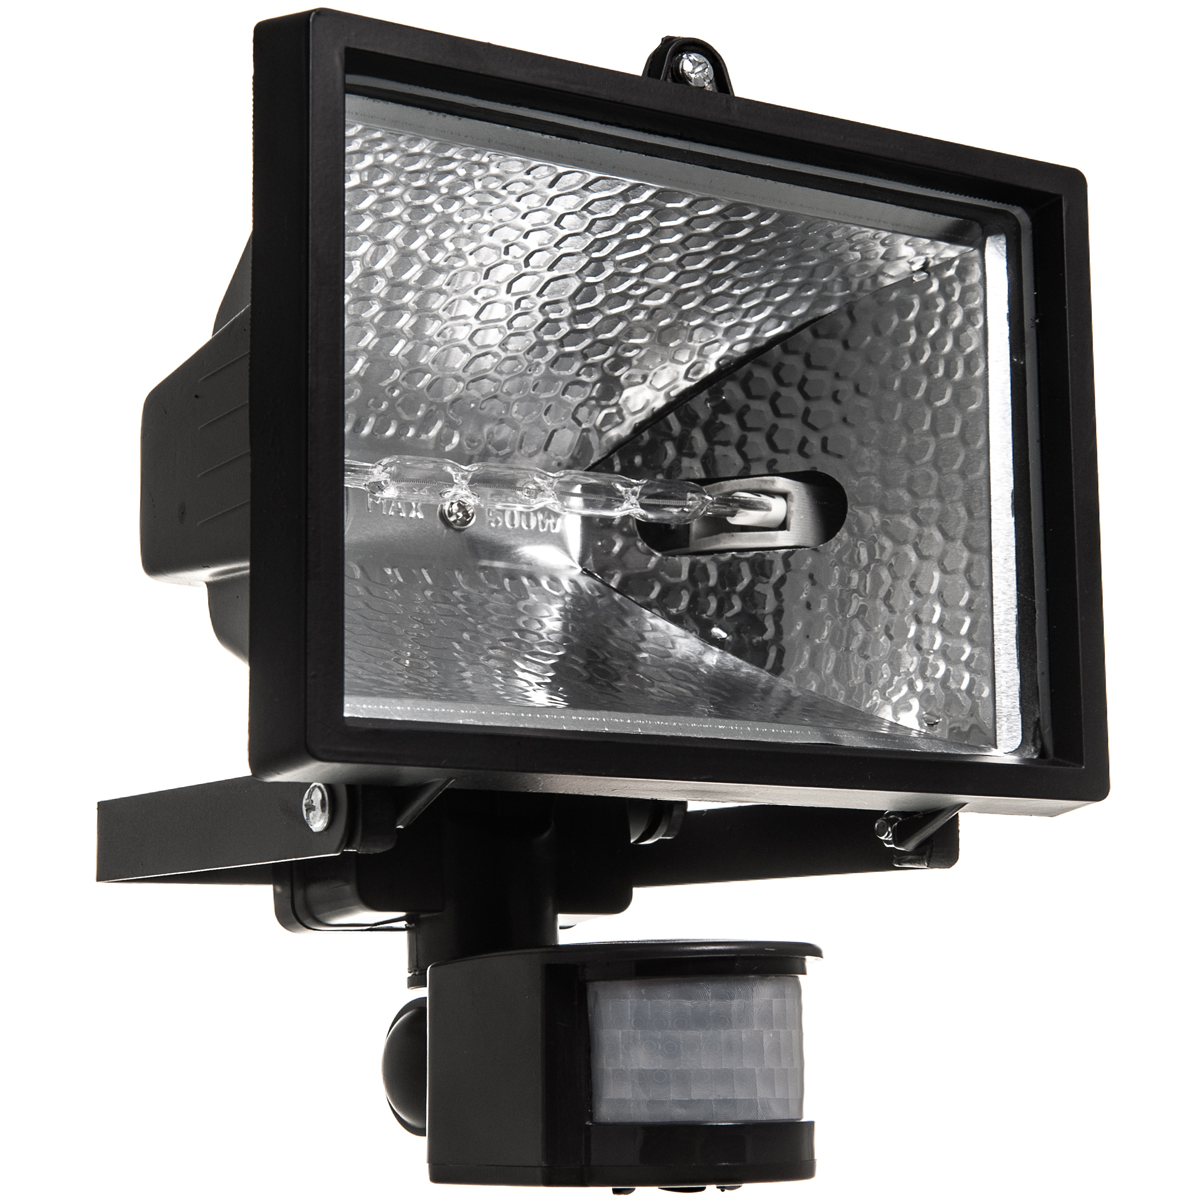 Outdoor Garden 400w Pir Motion Sensor Security Light Halogen Floodlight Lighting Ebay